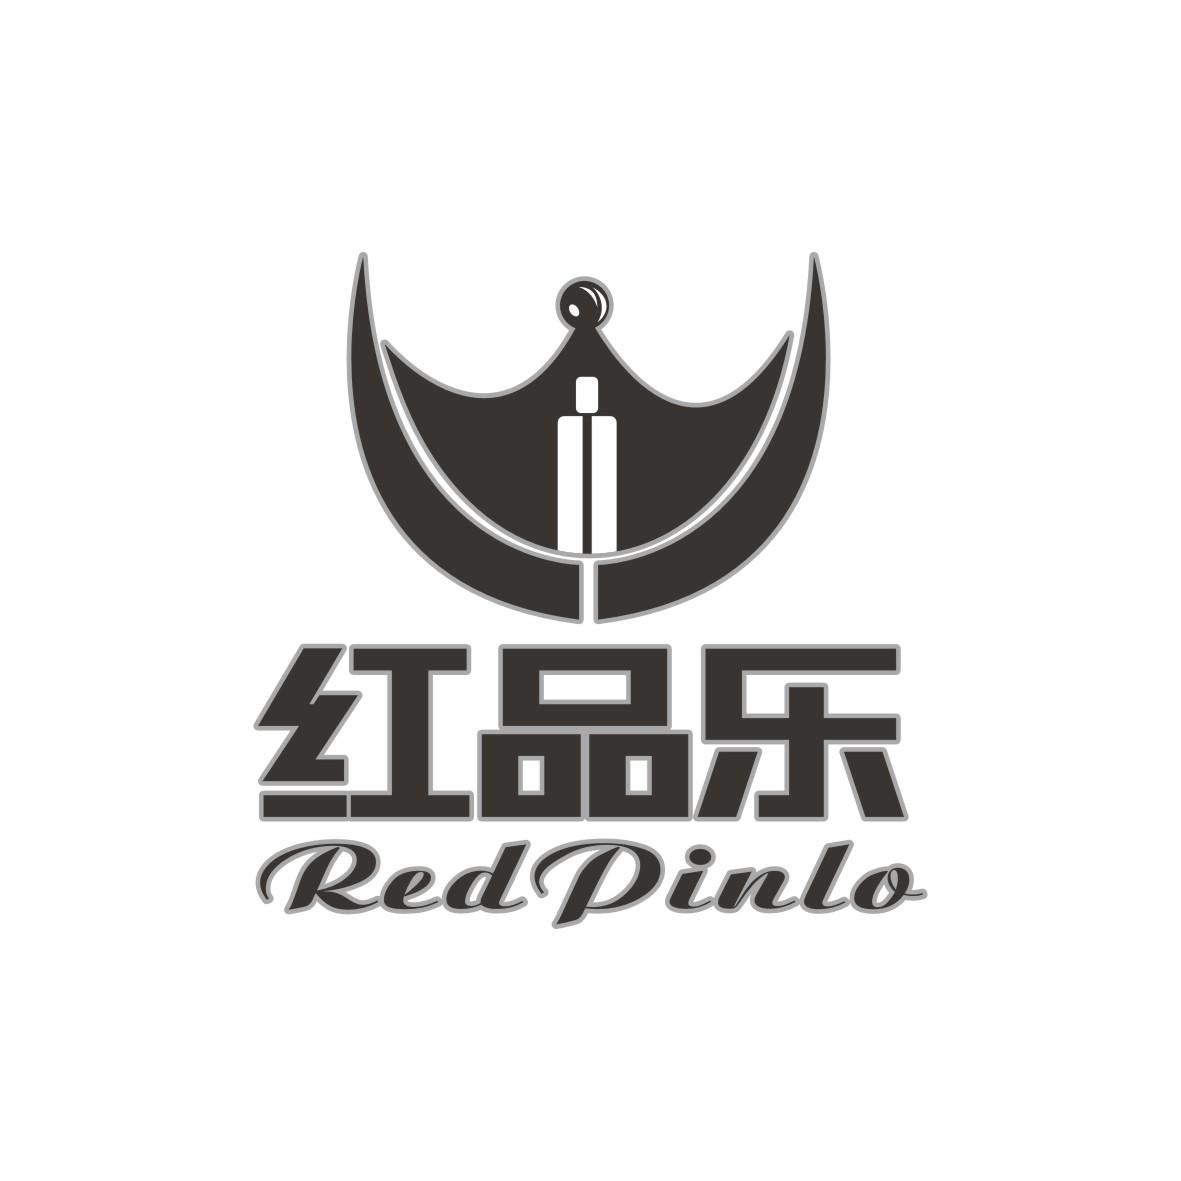 Ʒ RED PINLO